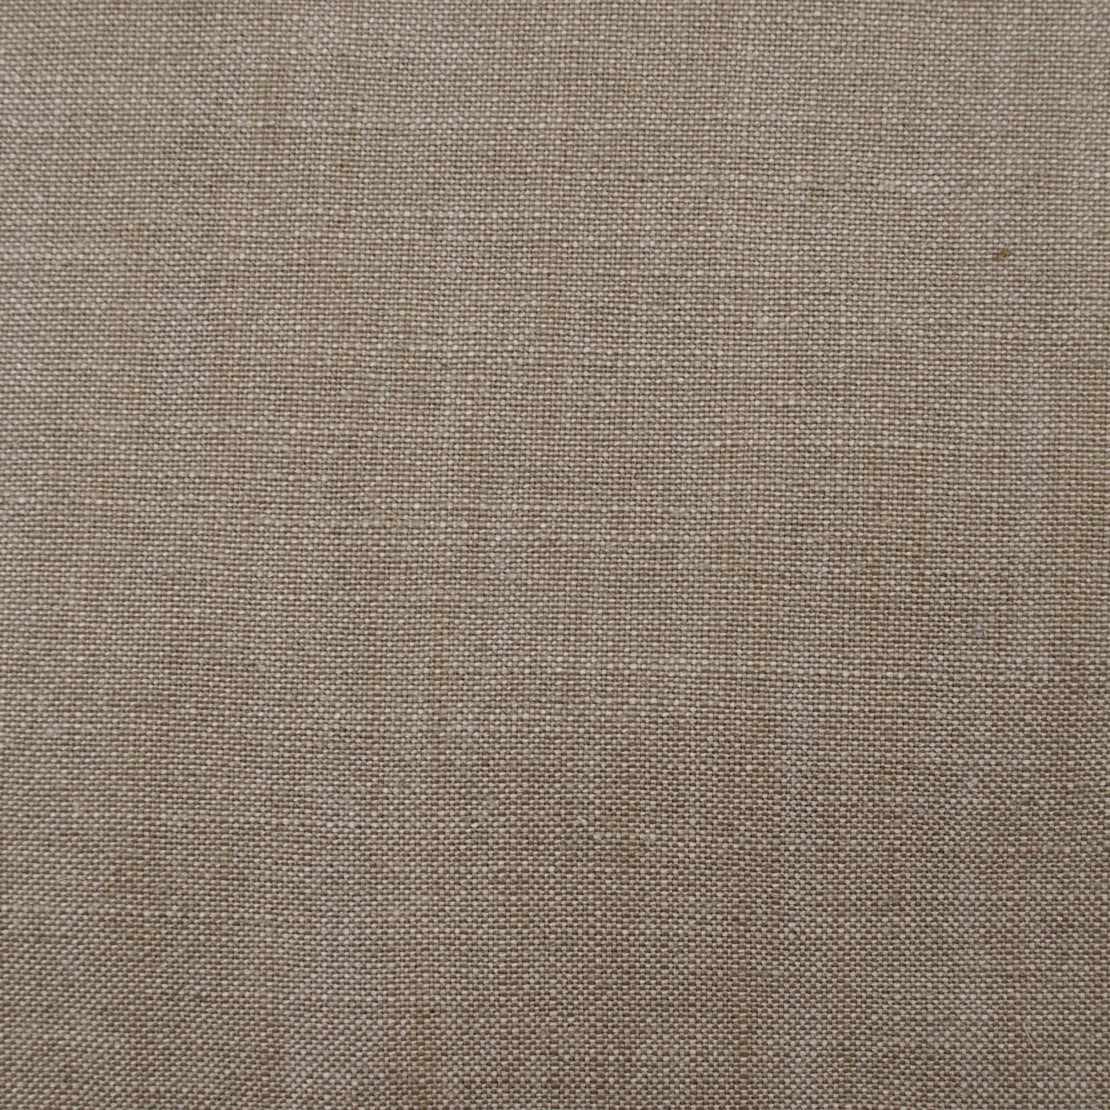 Purchase Mag FabricPattern# 11217 pattern name Hampton Stone